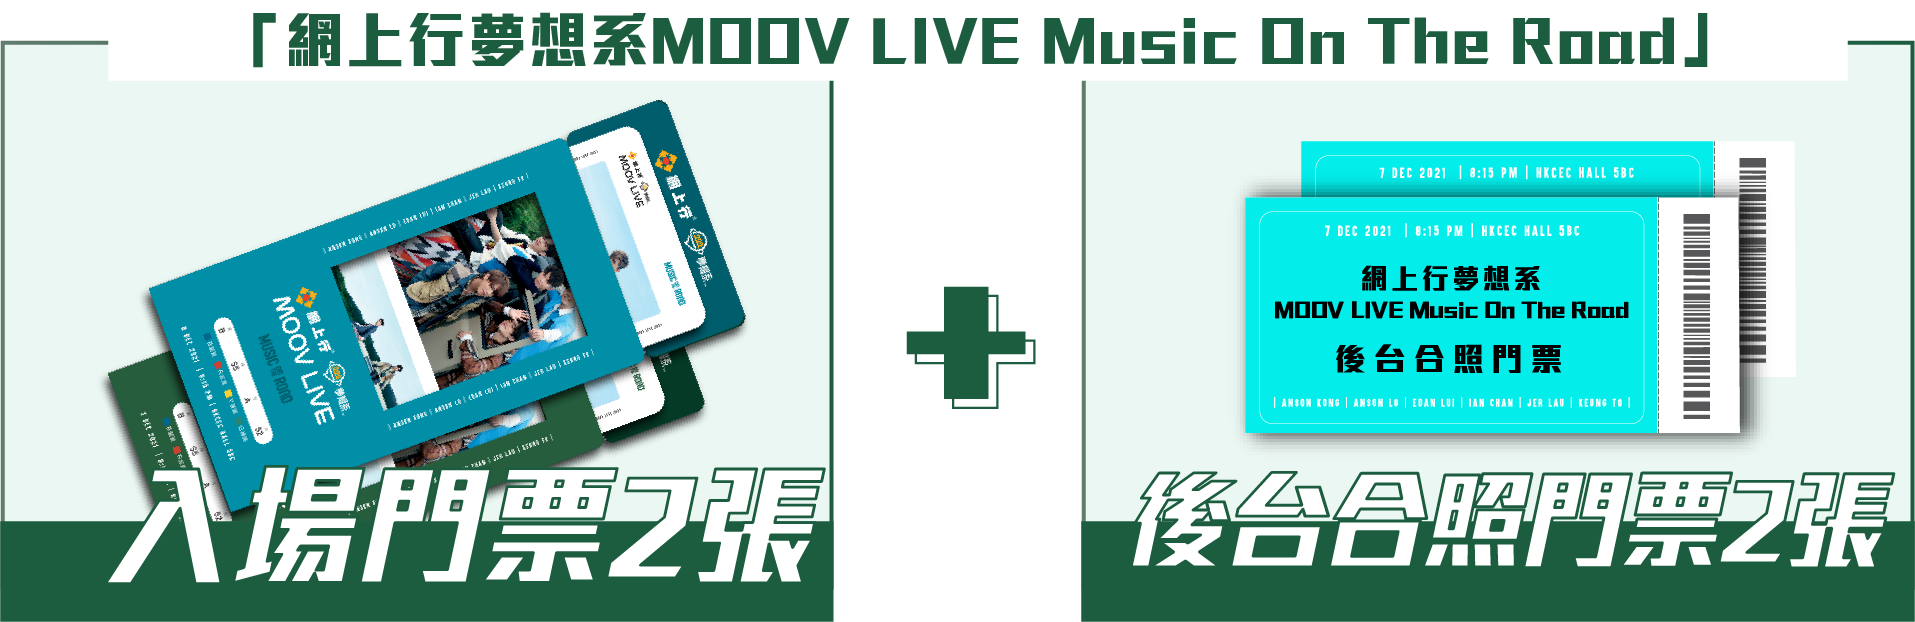 「網上行夢想系MOOV LIVE Music On The Road」入場門票2張+後台合照門票2張